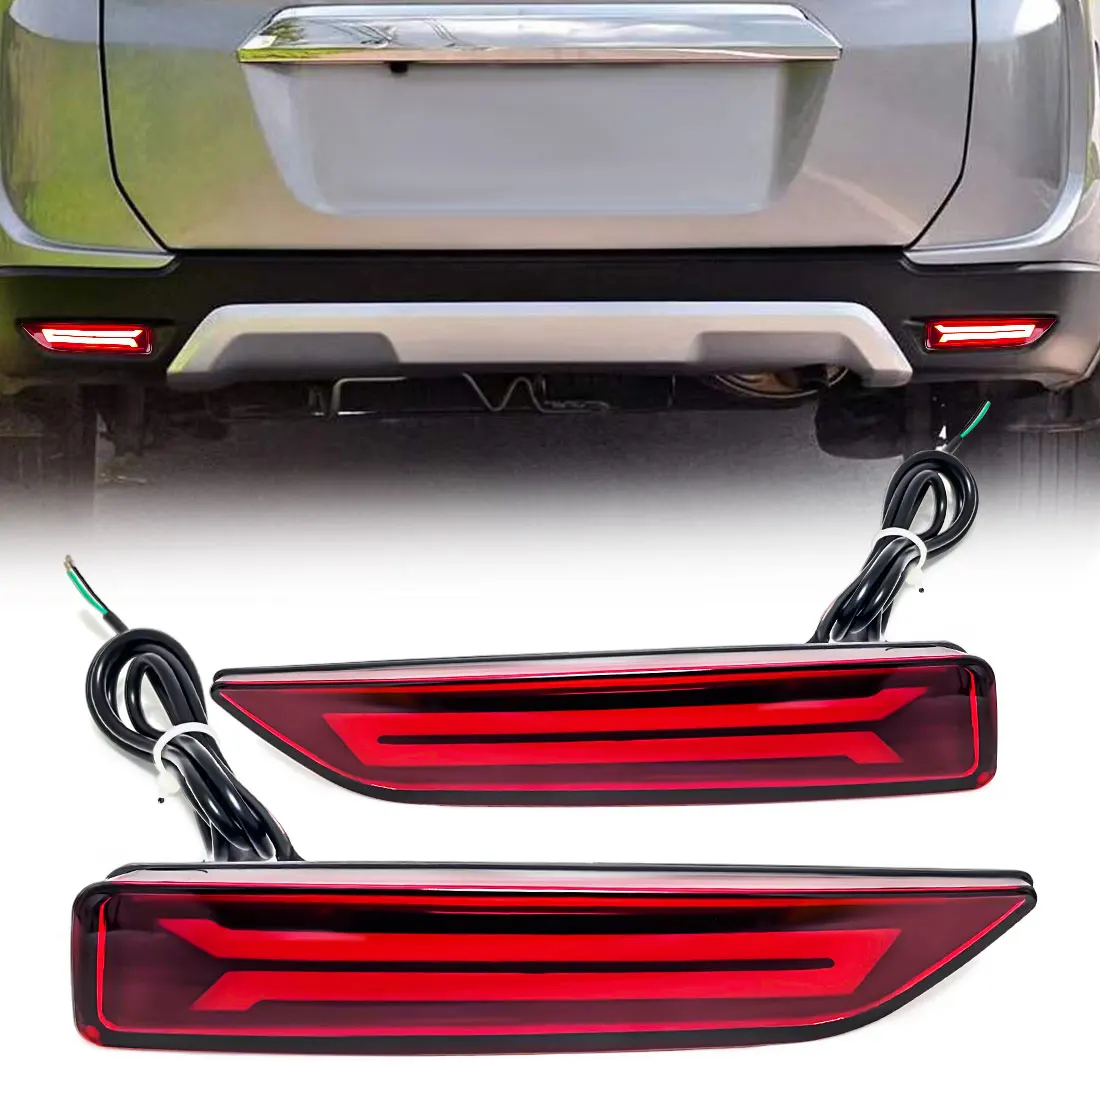 

2Pcs LED Rear Bumper Lights with Brake Lamp Driving Light Reflector For Honda BRV 2016-2018